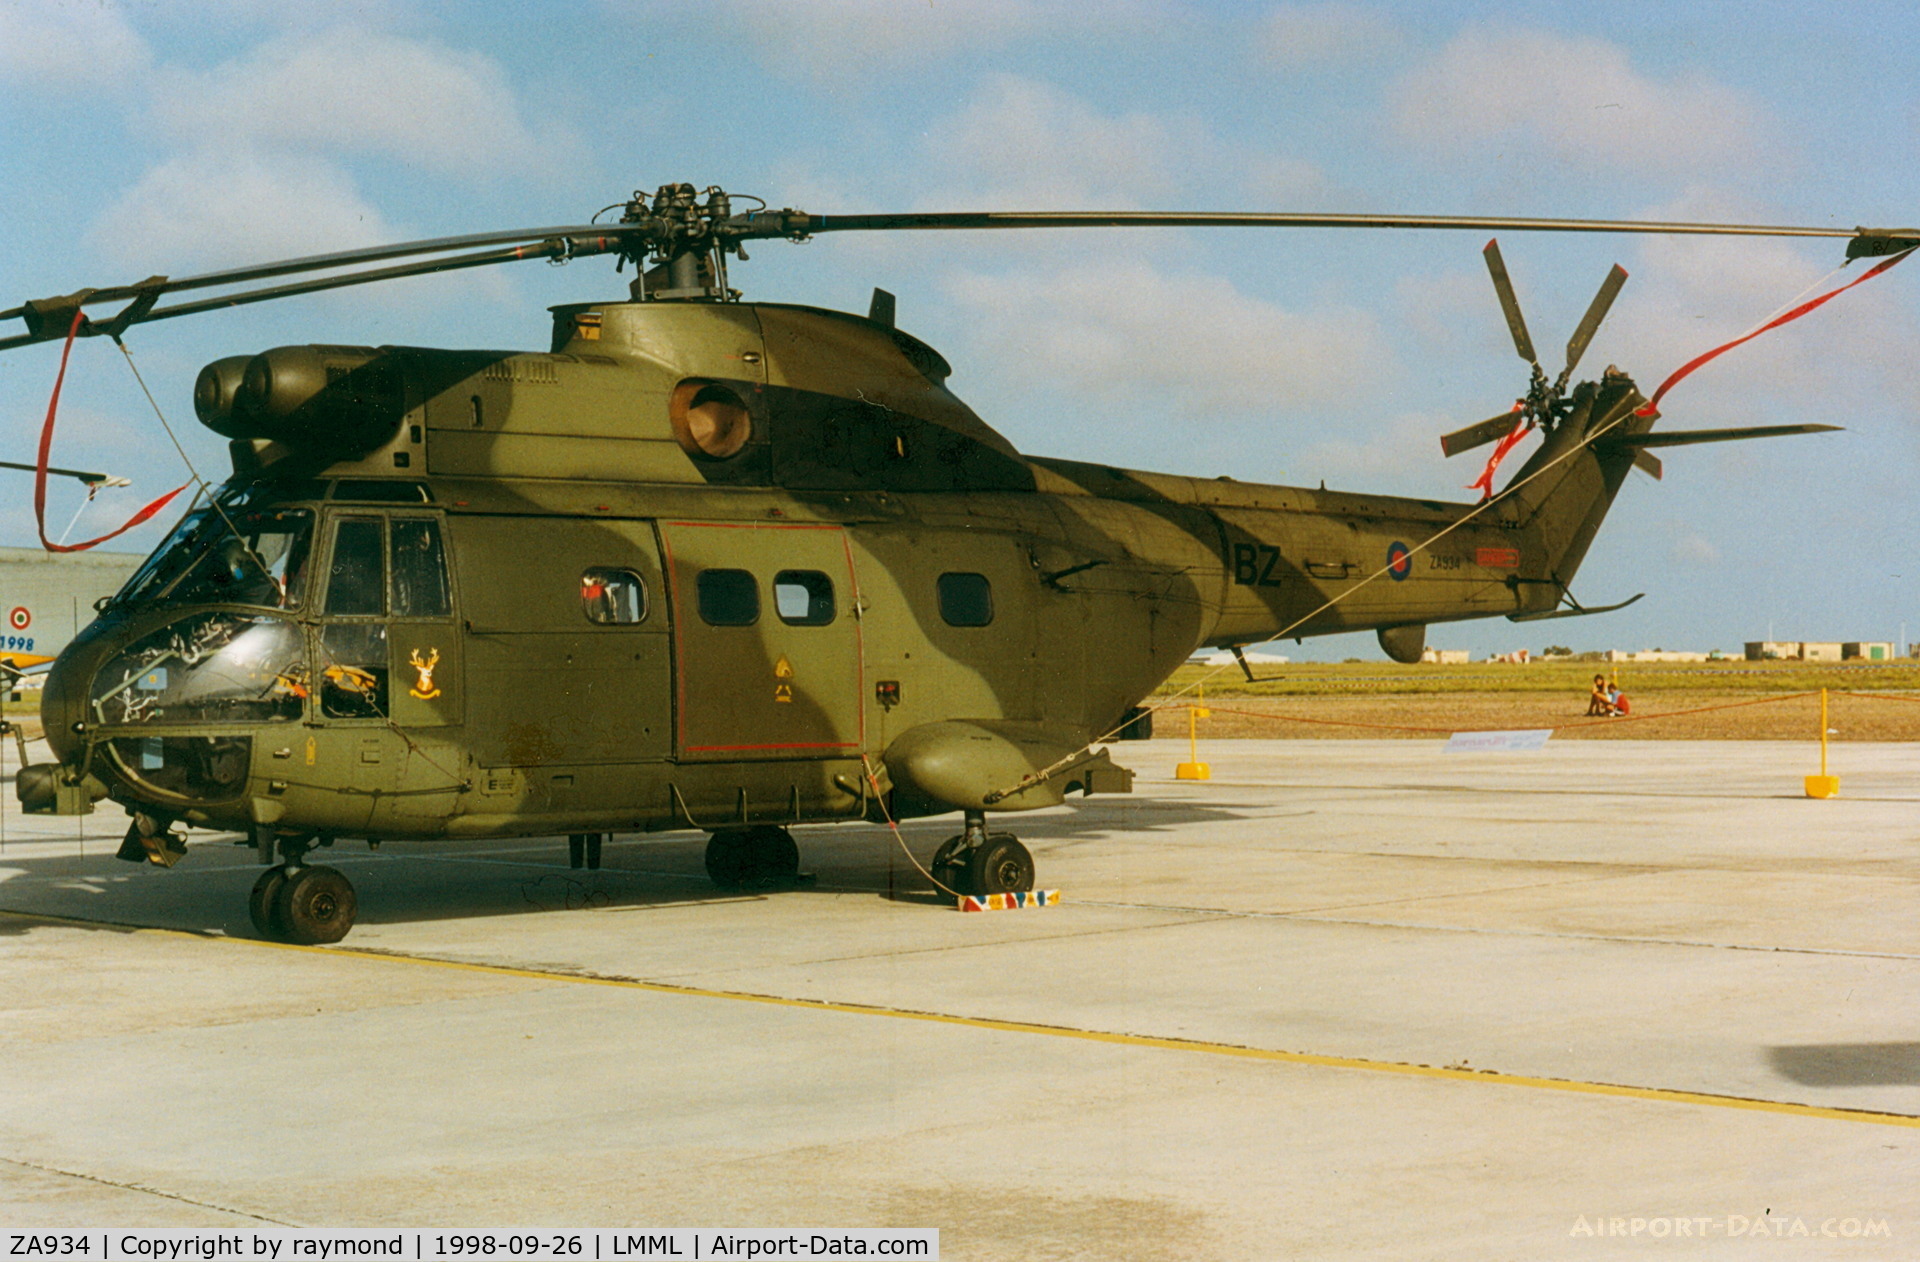 ZA934, 1980 Westland Puma HC.1 C/N 1622, Puma ZA934/BZ RAF